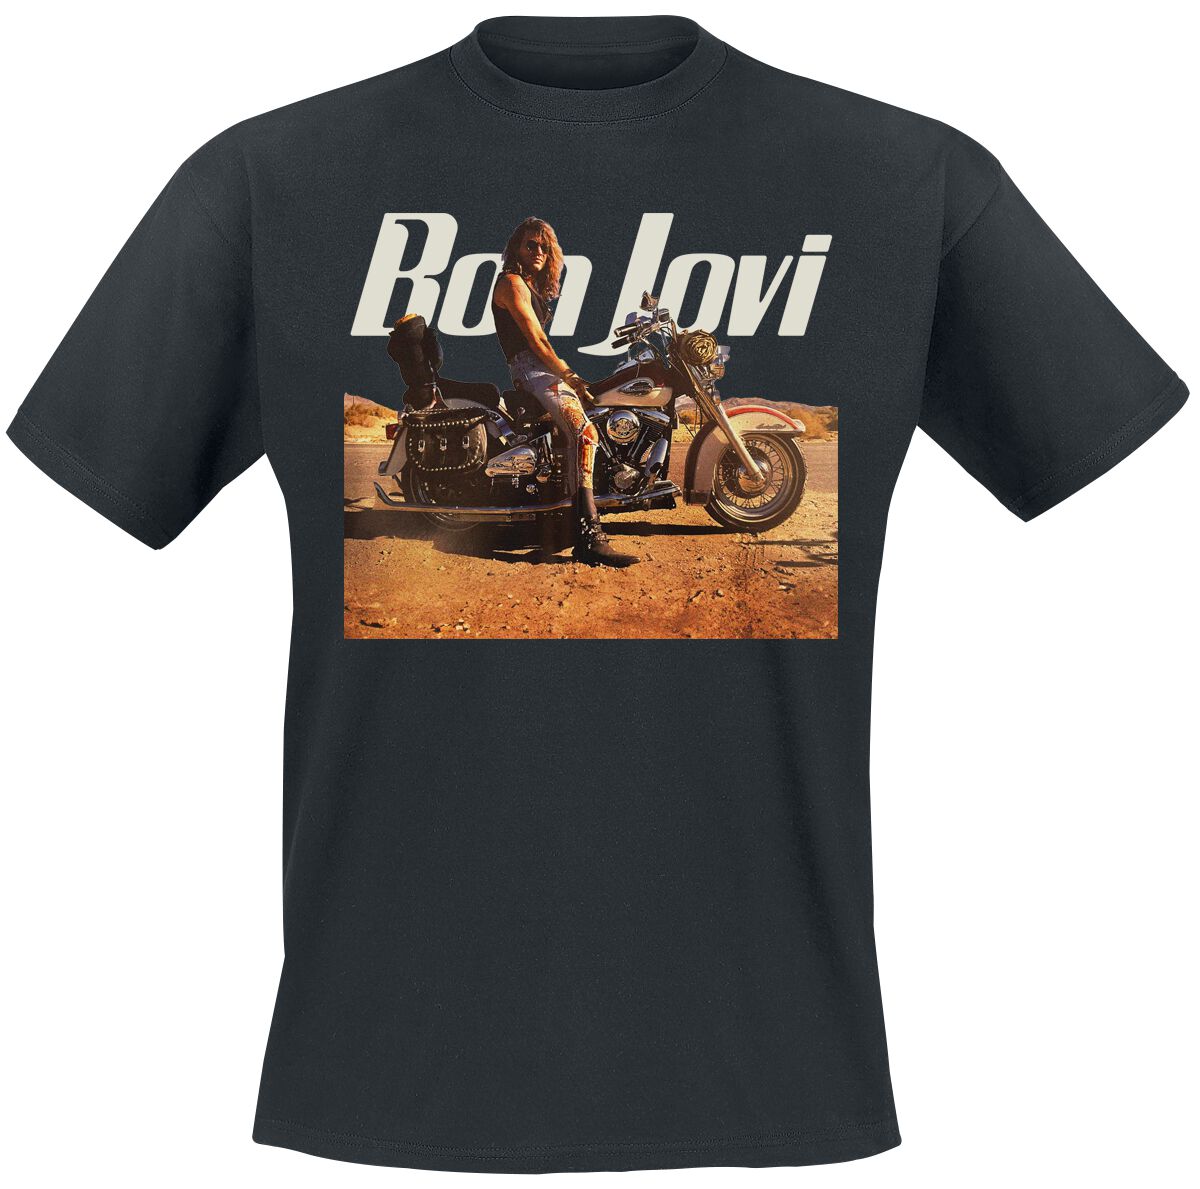 bon jovi t-shirt - wanted - s bis 3xl - fÃ¼r mÃ¤nner - grÃ¶ÃŸe xxl - - lizenziertes merchandise! schwarz